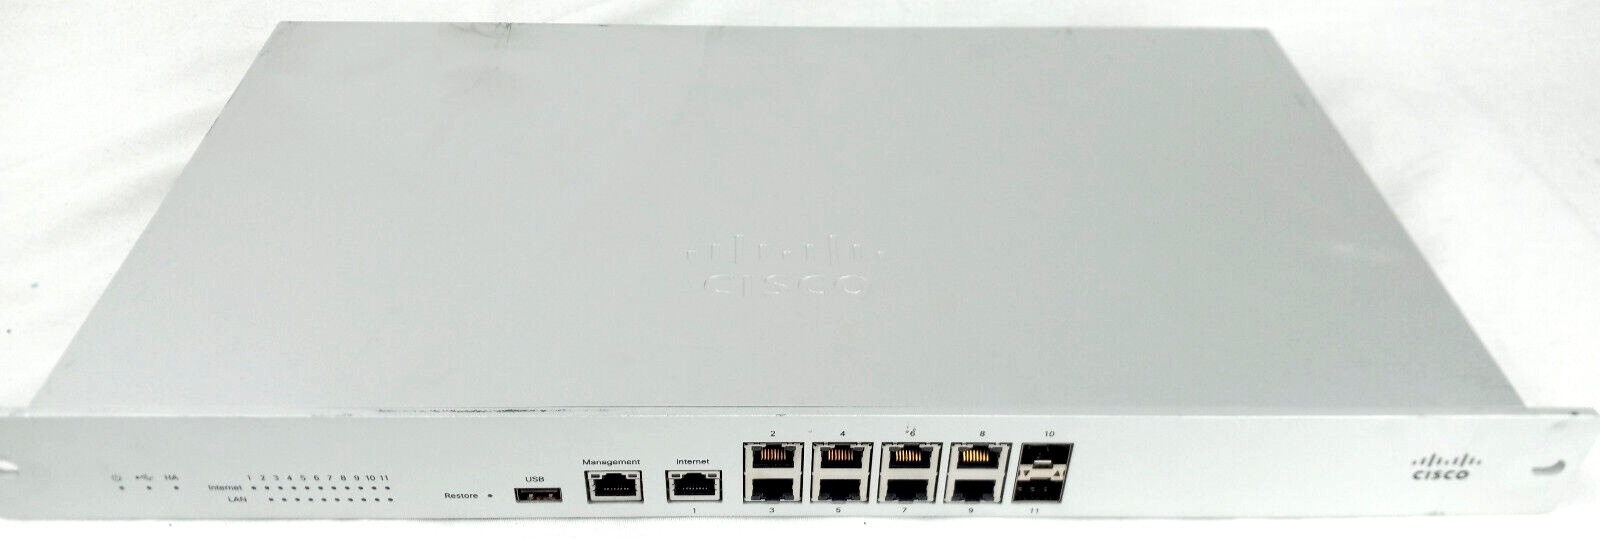 Cisco ‎Meraki MX100-HW Meraki Cloud Managed Security Appliance *Unclaimed* USED